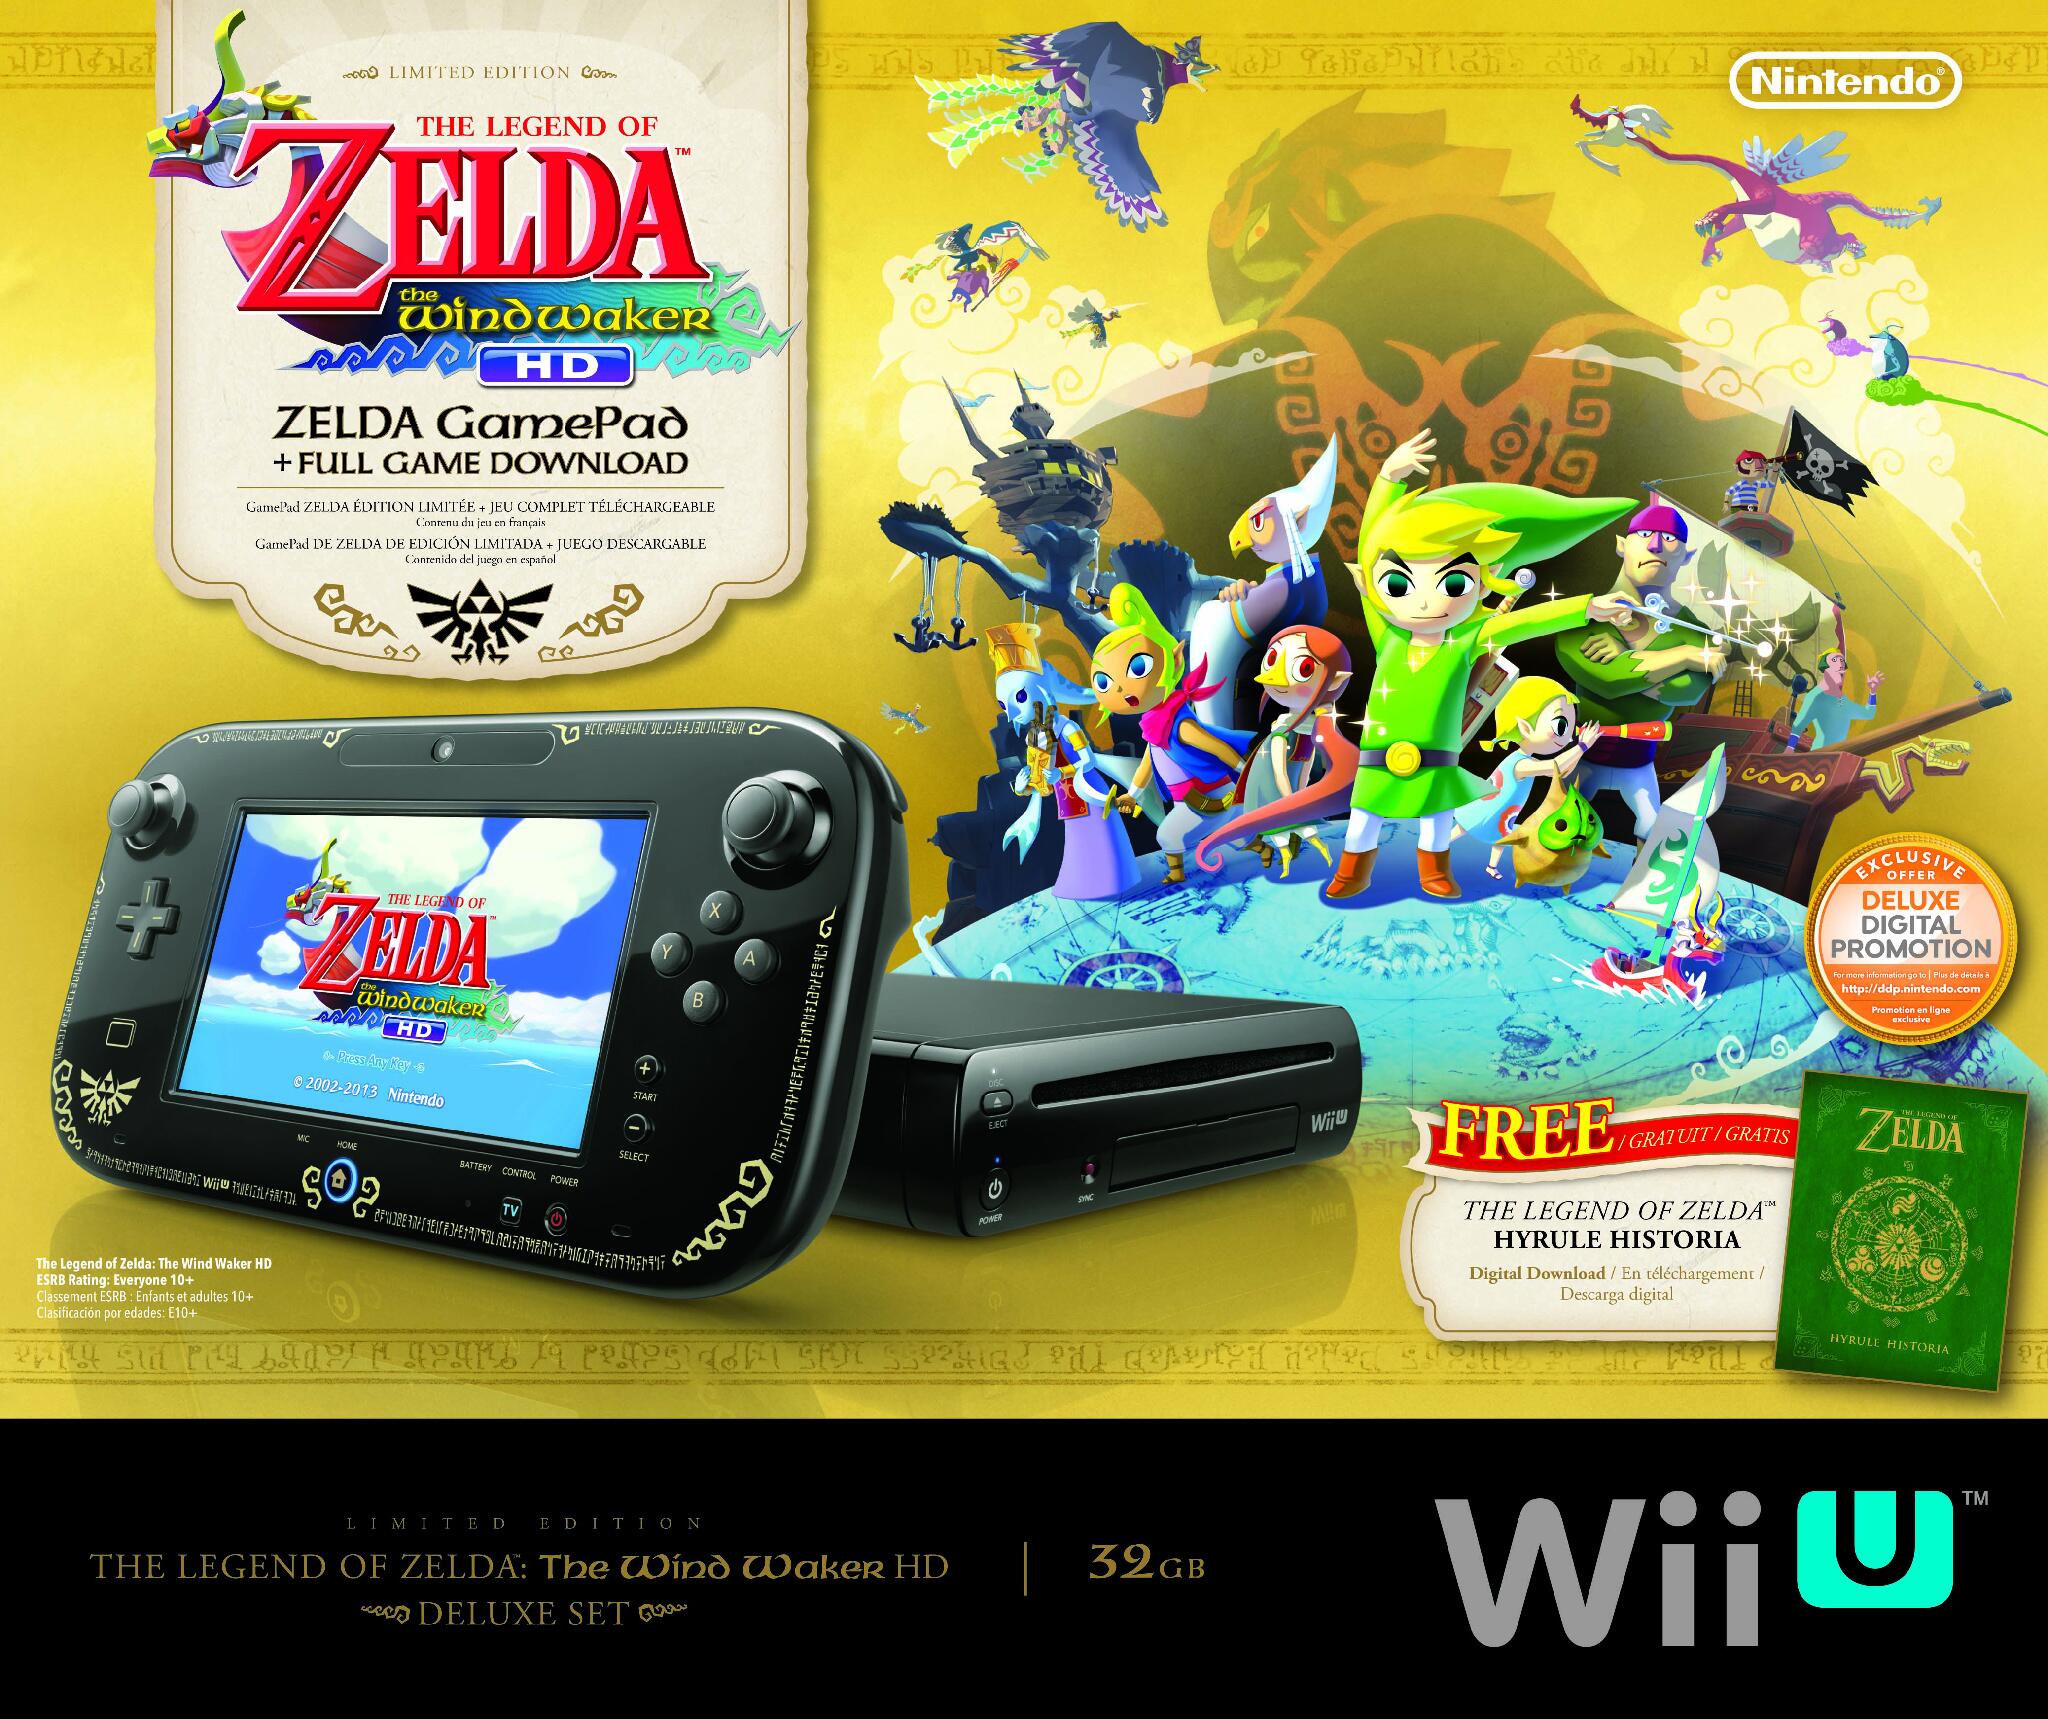 Nintendo NY on Twitter: "The Legend of Zelda: The Wind Waker HD Wii U sets sail on 9/20. Reserve yours today at #NintendoWorld http://t.co/B3PyTFOsDj" /